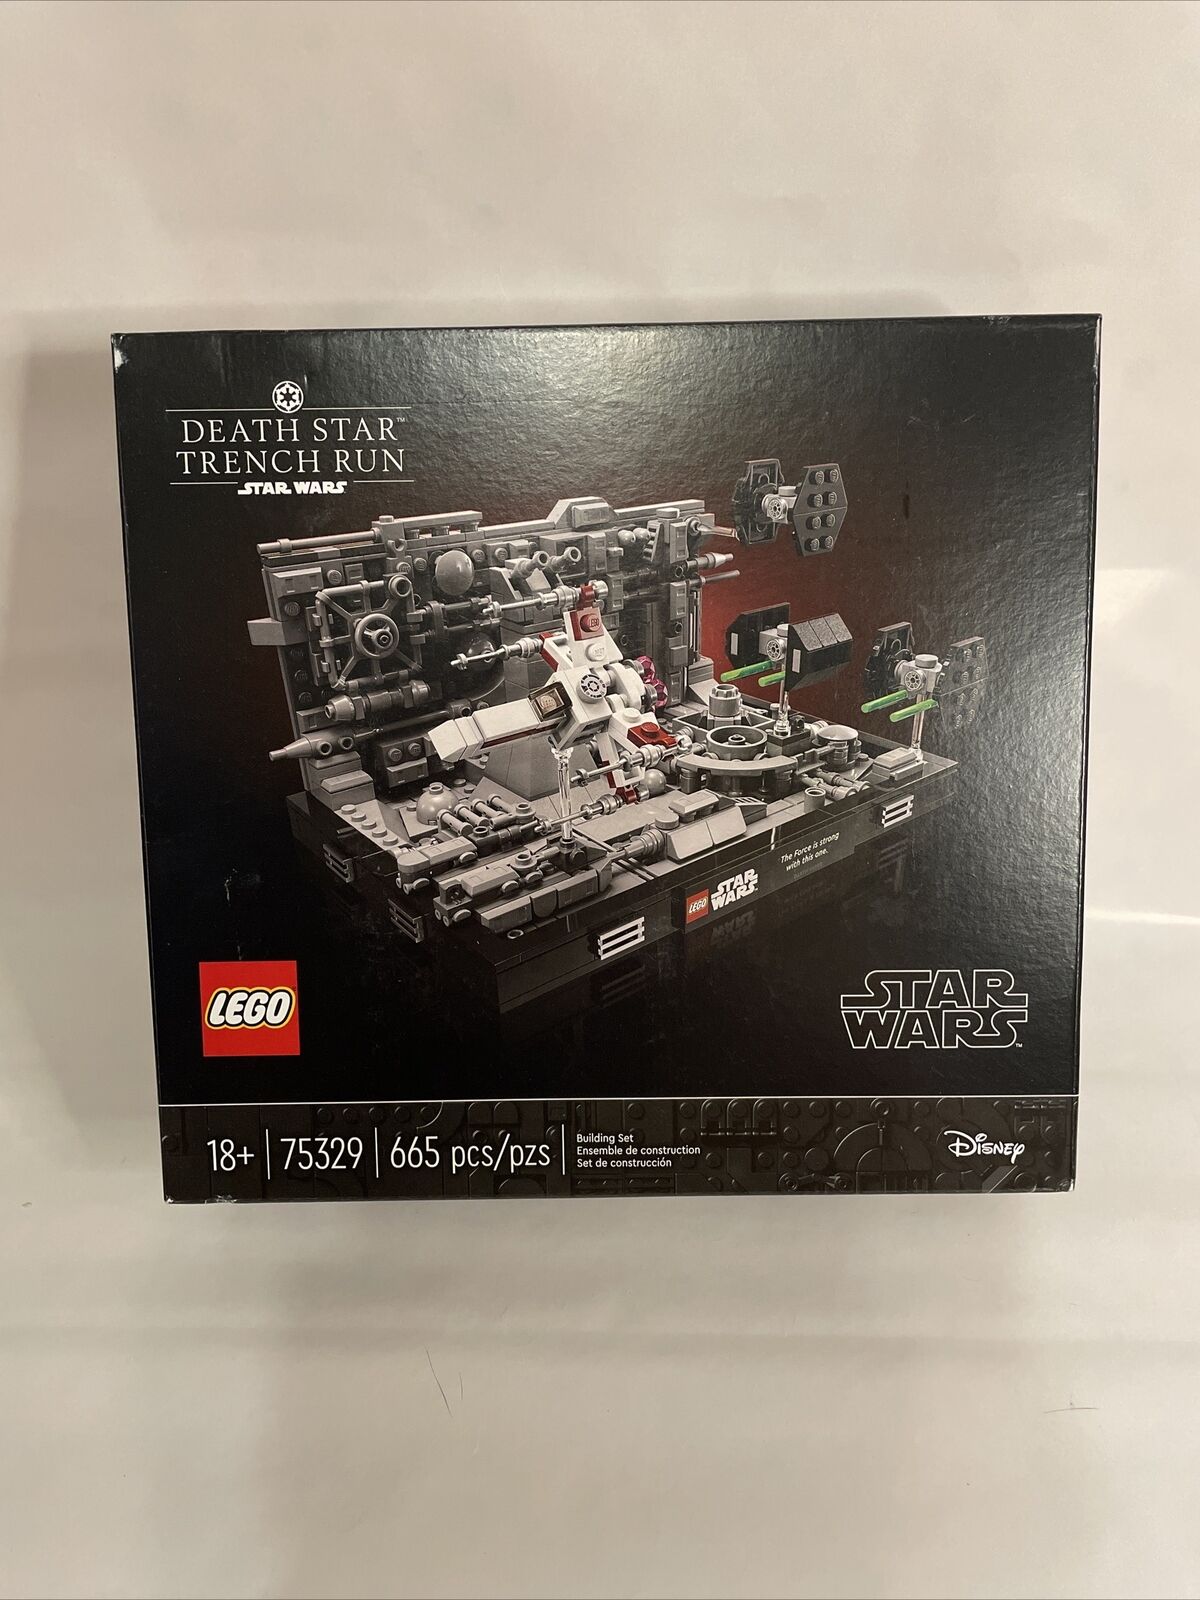 Lego Star Wars Death Star Trench Run Diorama 75329 NEW SHIPS TODAY